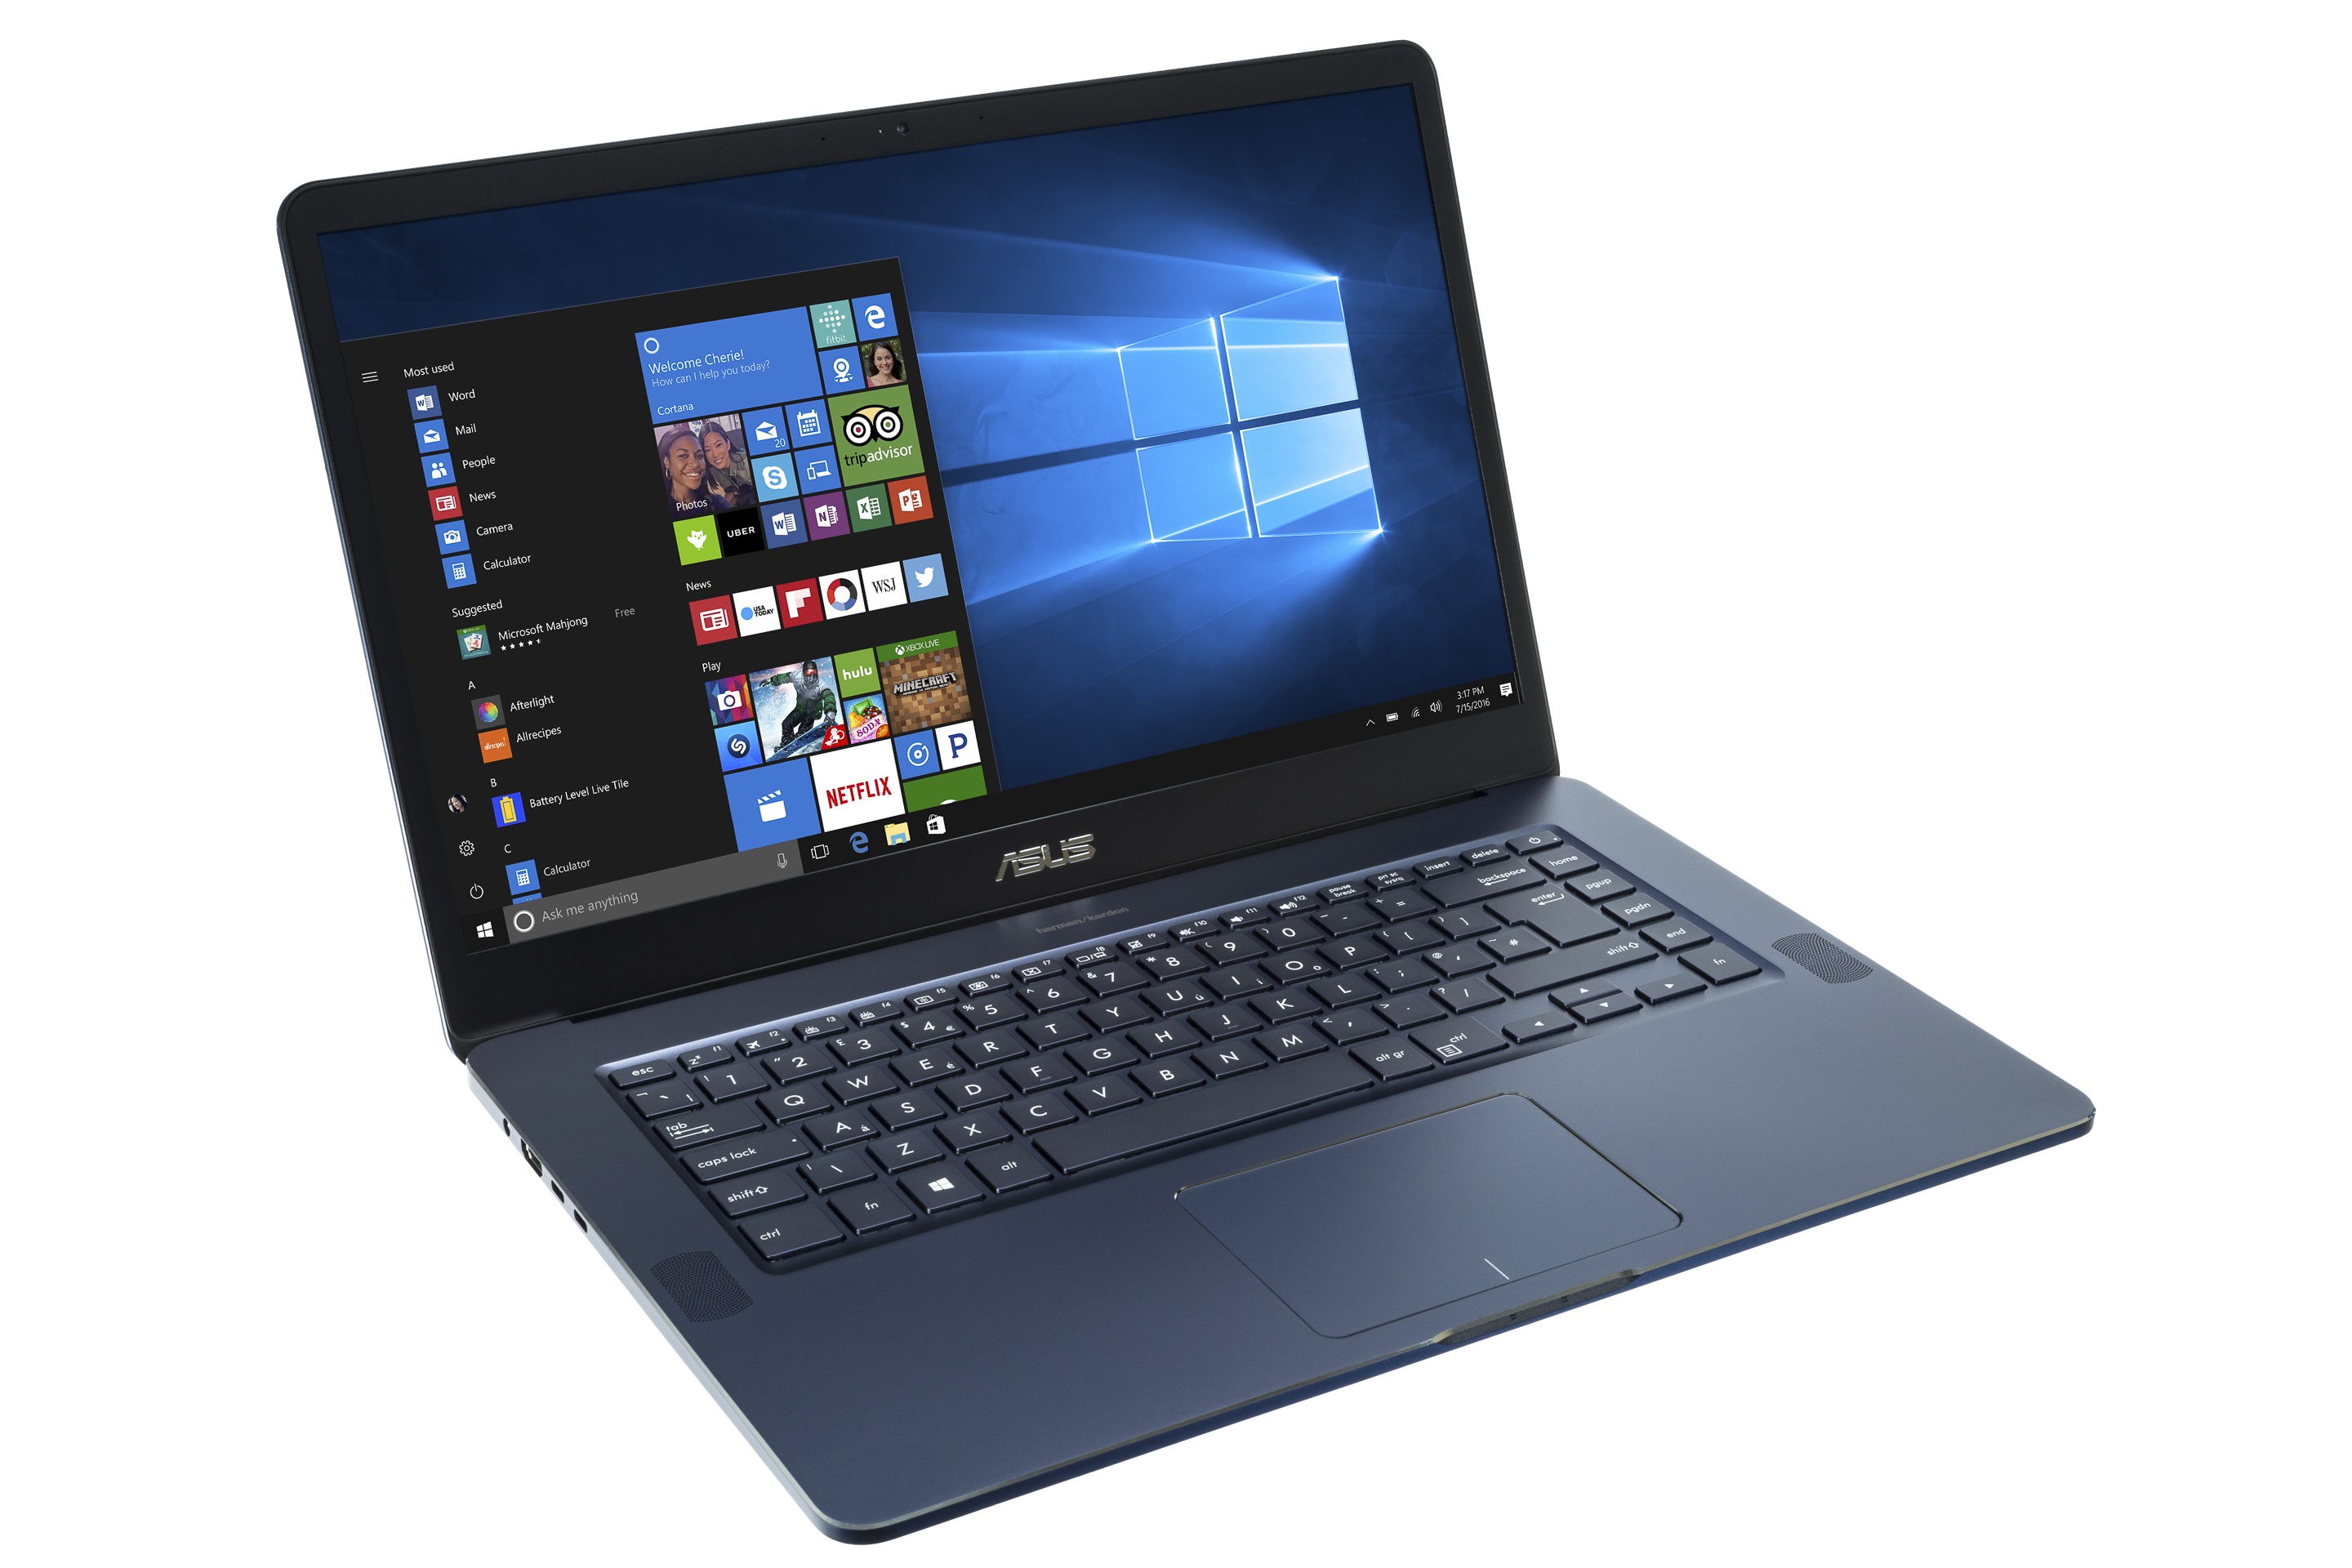 ZenBook Pro (UX550) with Windows 10